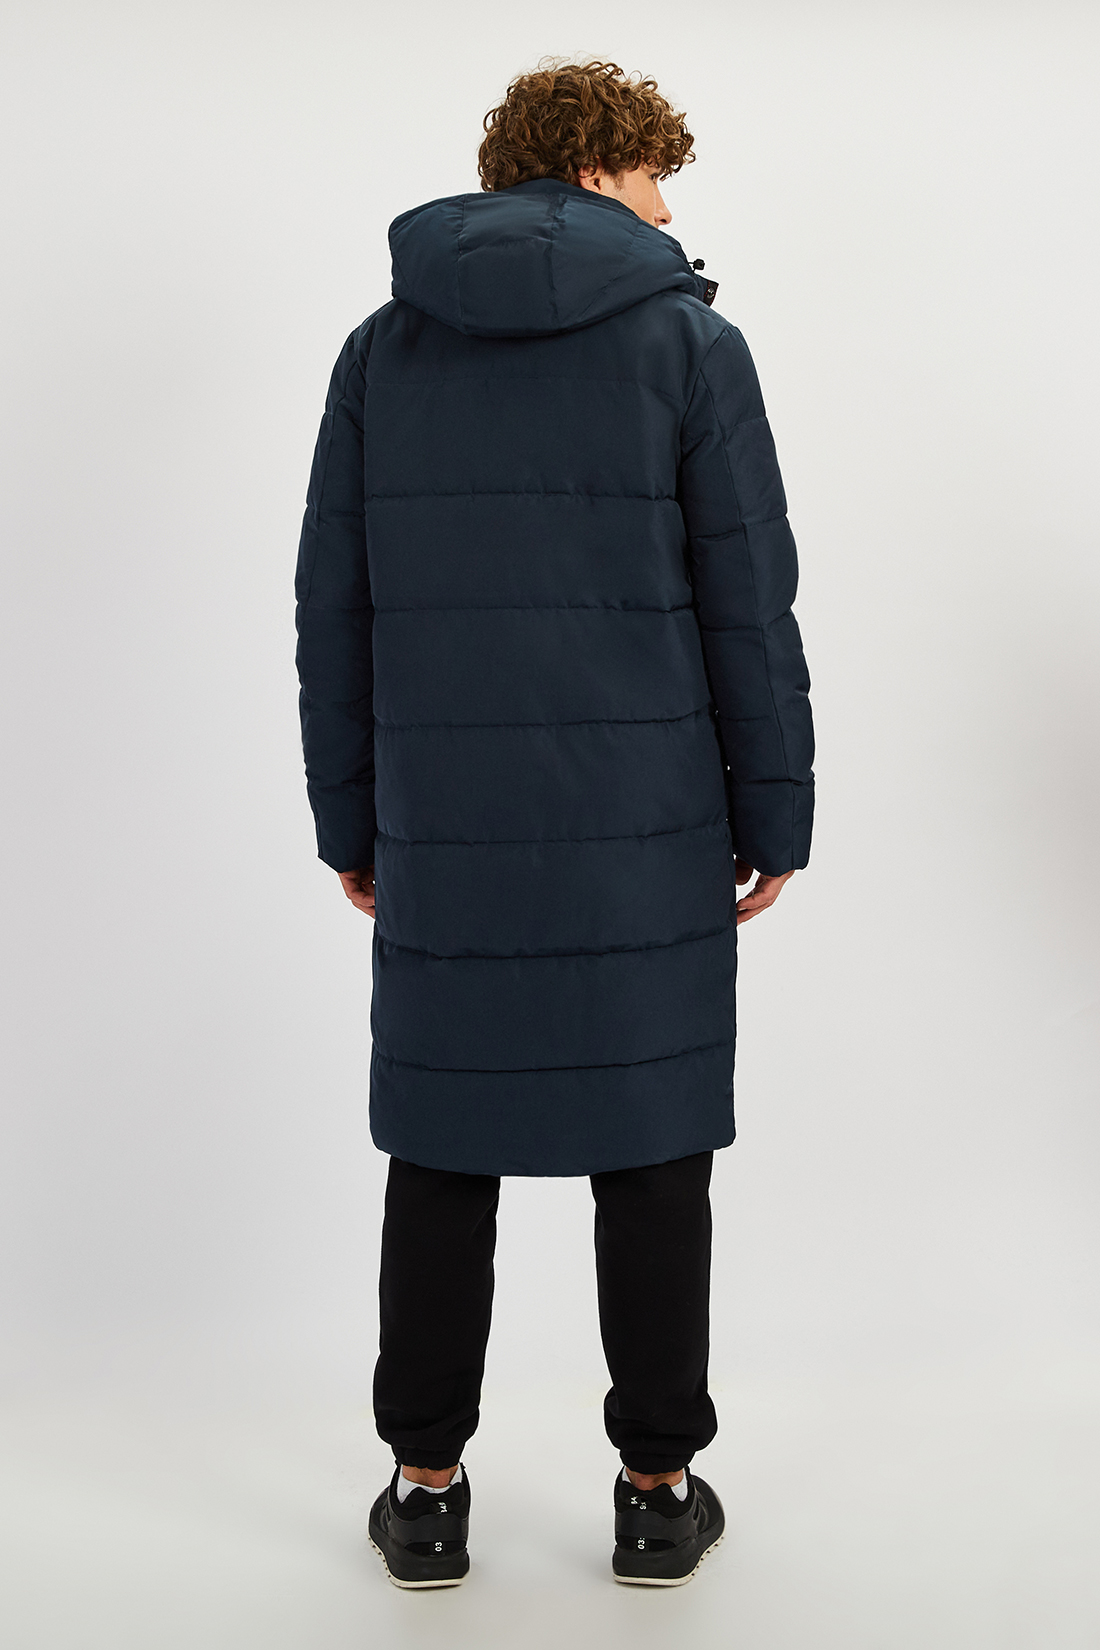 Длинная куртка (эко пух) (арт. baon B541506), размер M, цвет синий Длинная куртка (эко пух) (арт. baon B541506) - фото 2